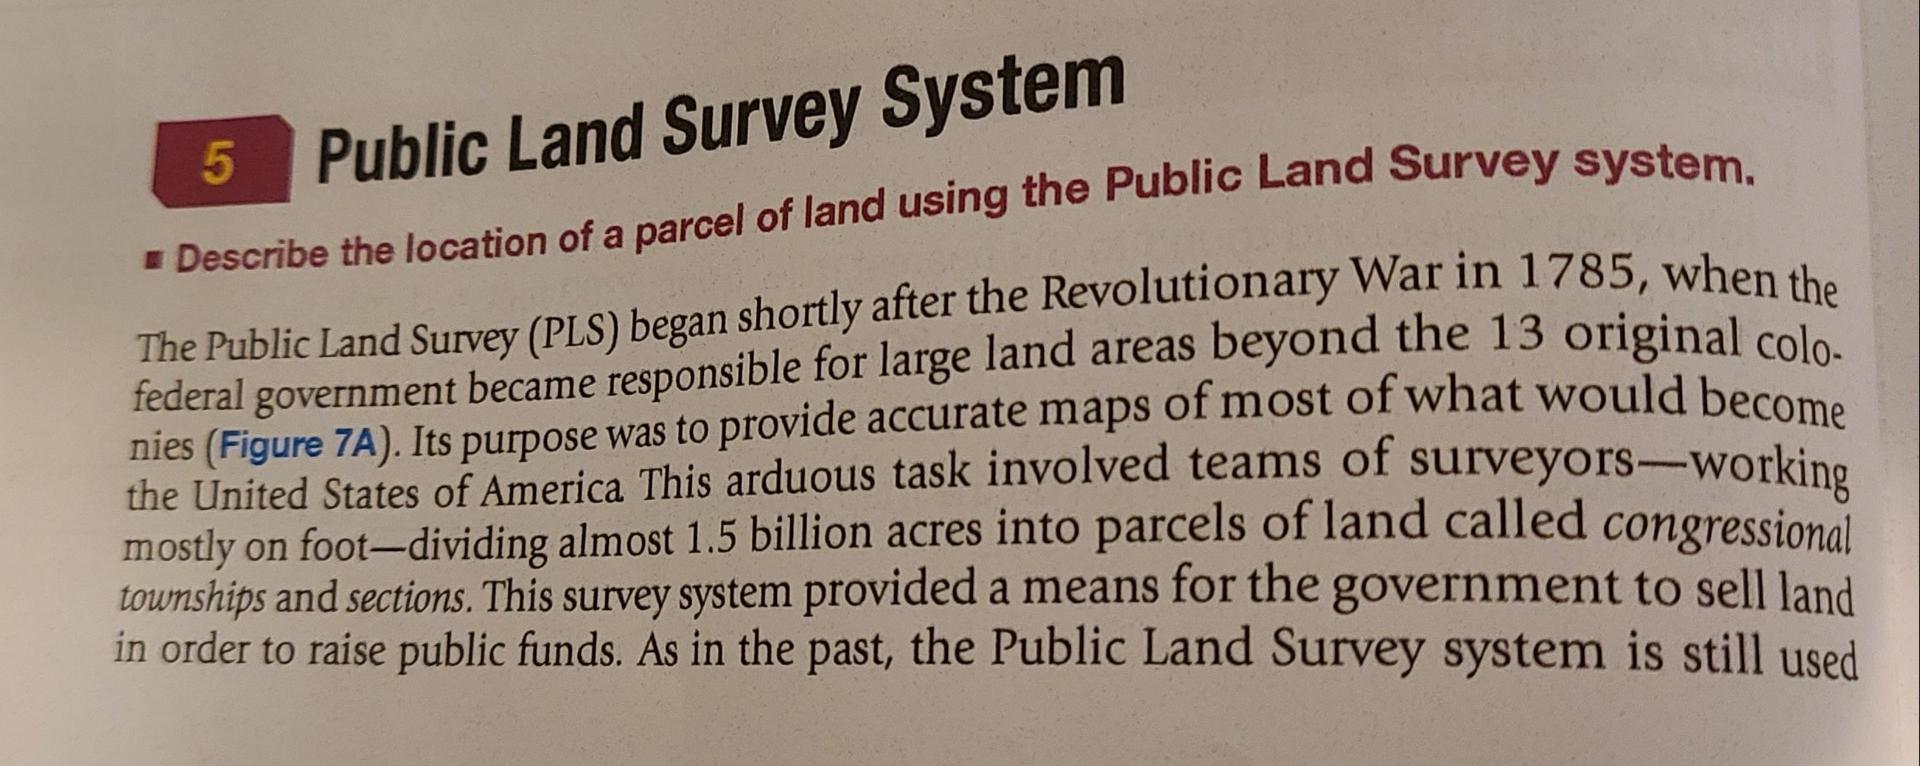 5 Public Land Survey System Describe the location of a parcel of land using the Public Land Survey system. The Public Land Su